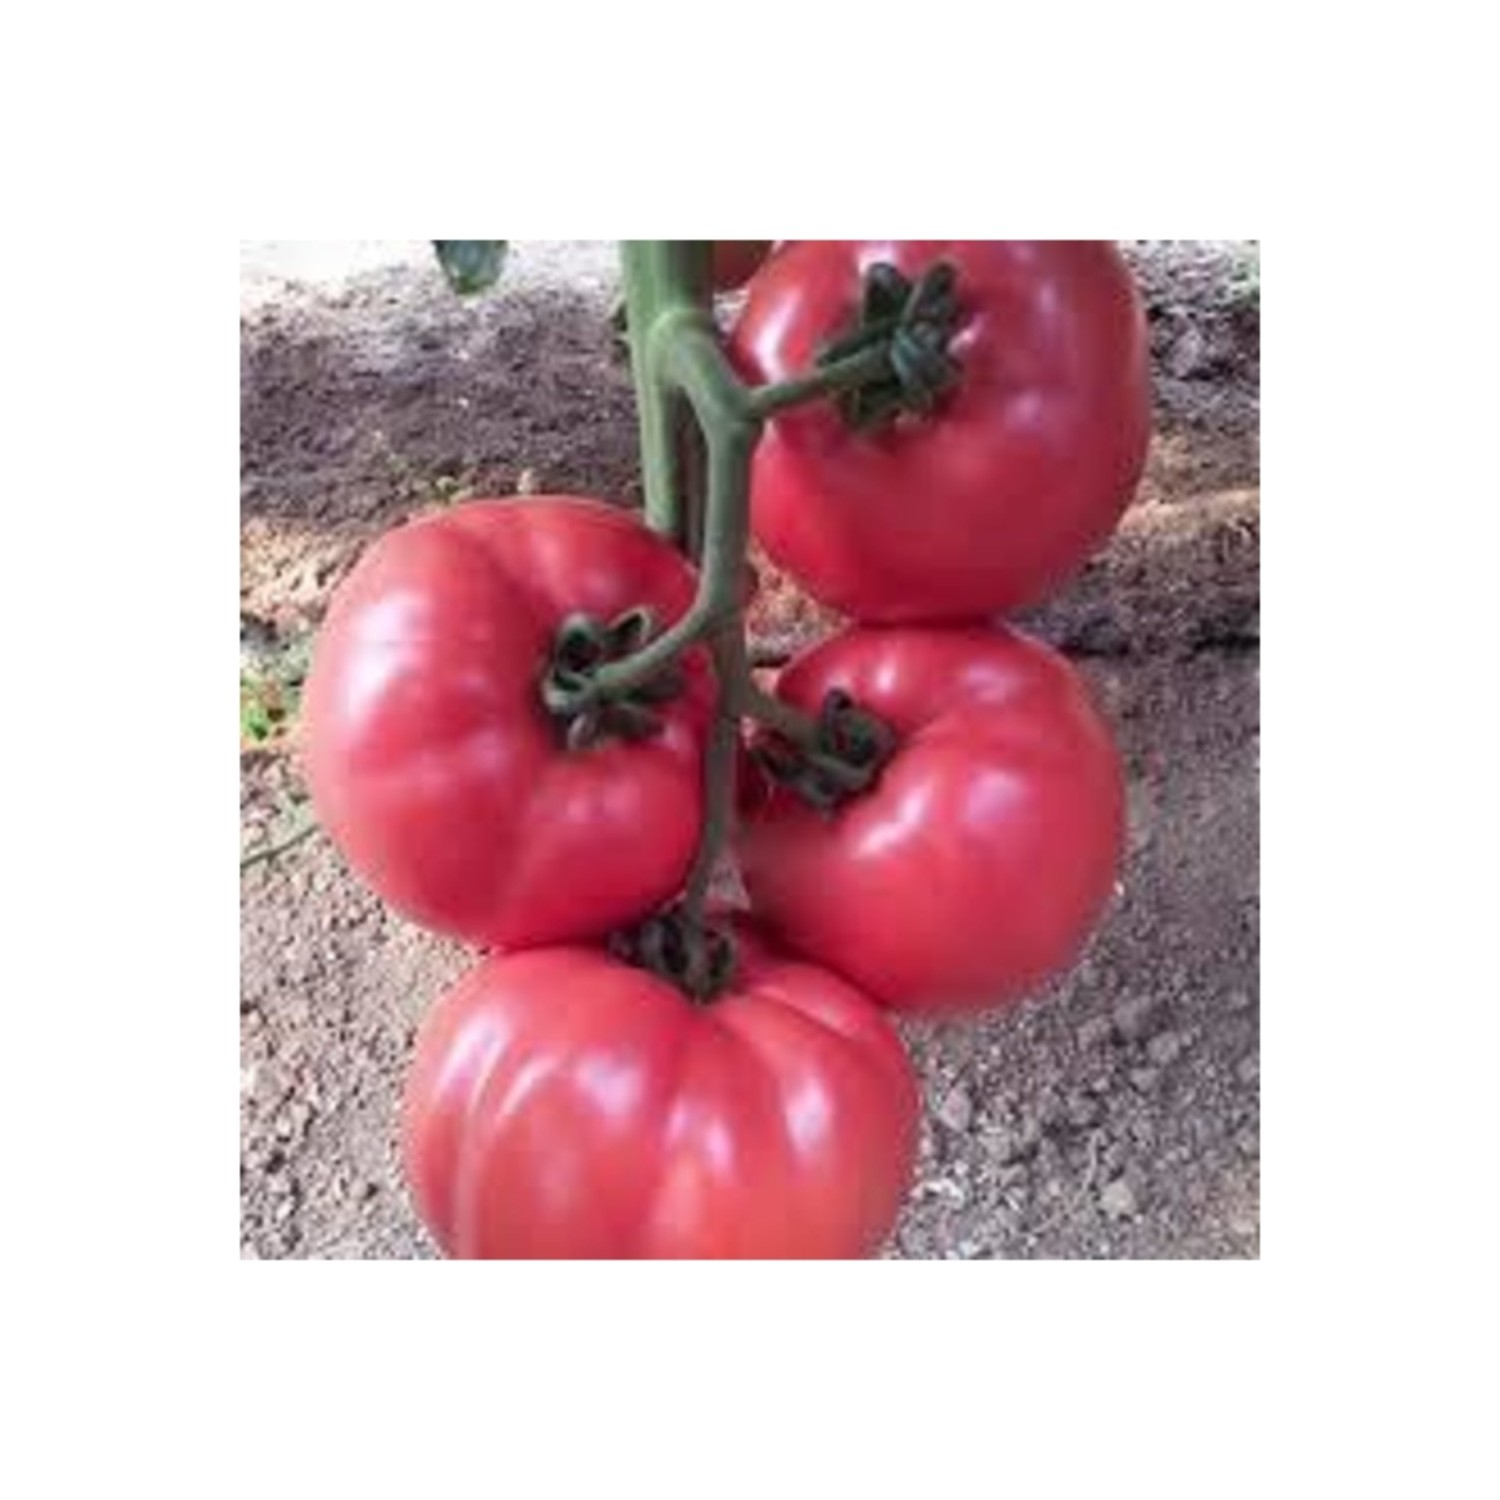 помидоры пинк парадайз отзывы фото